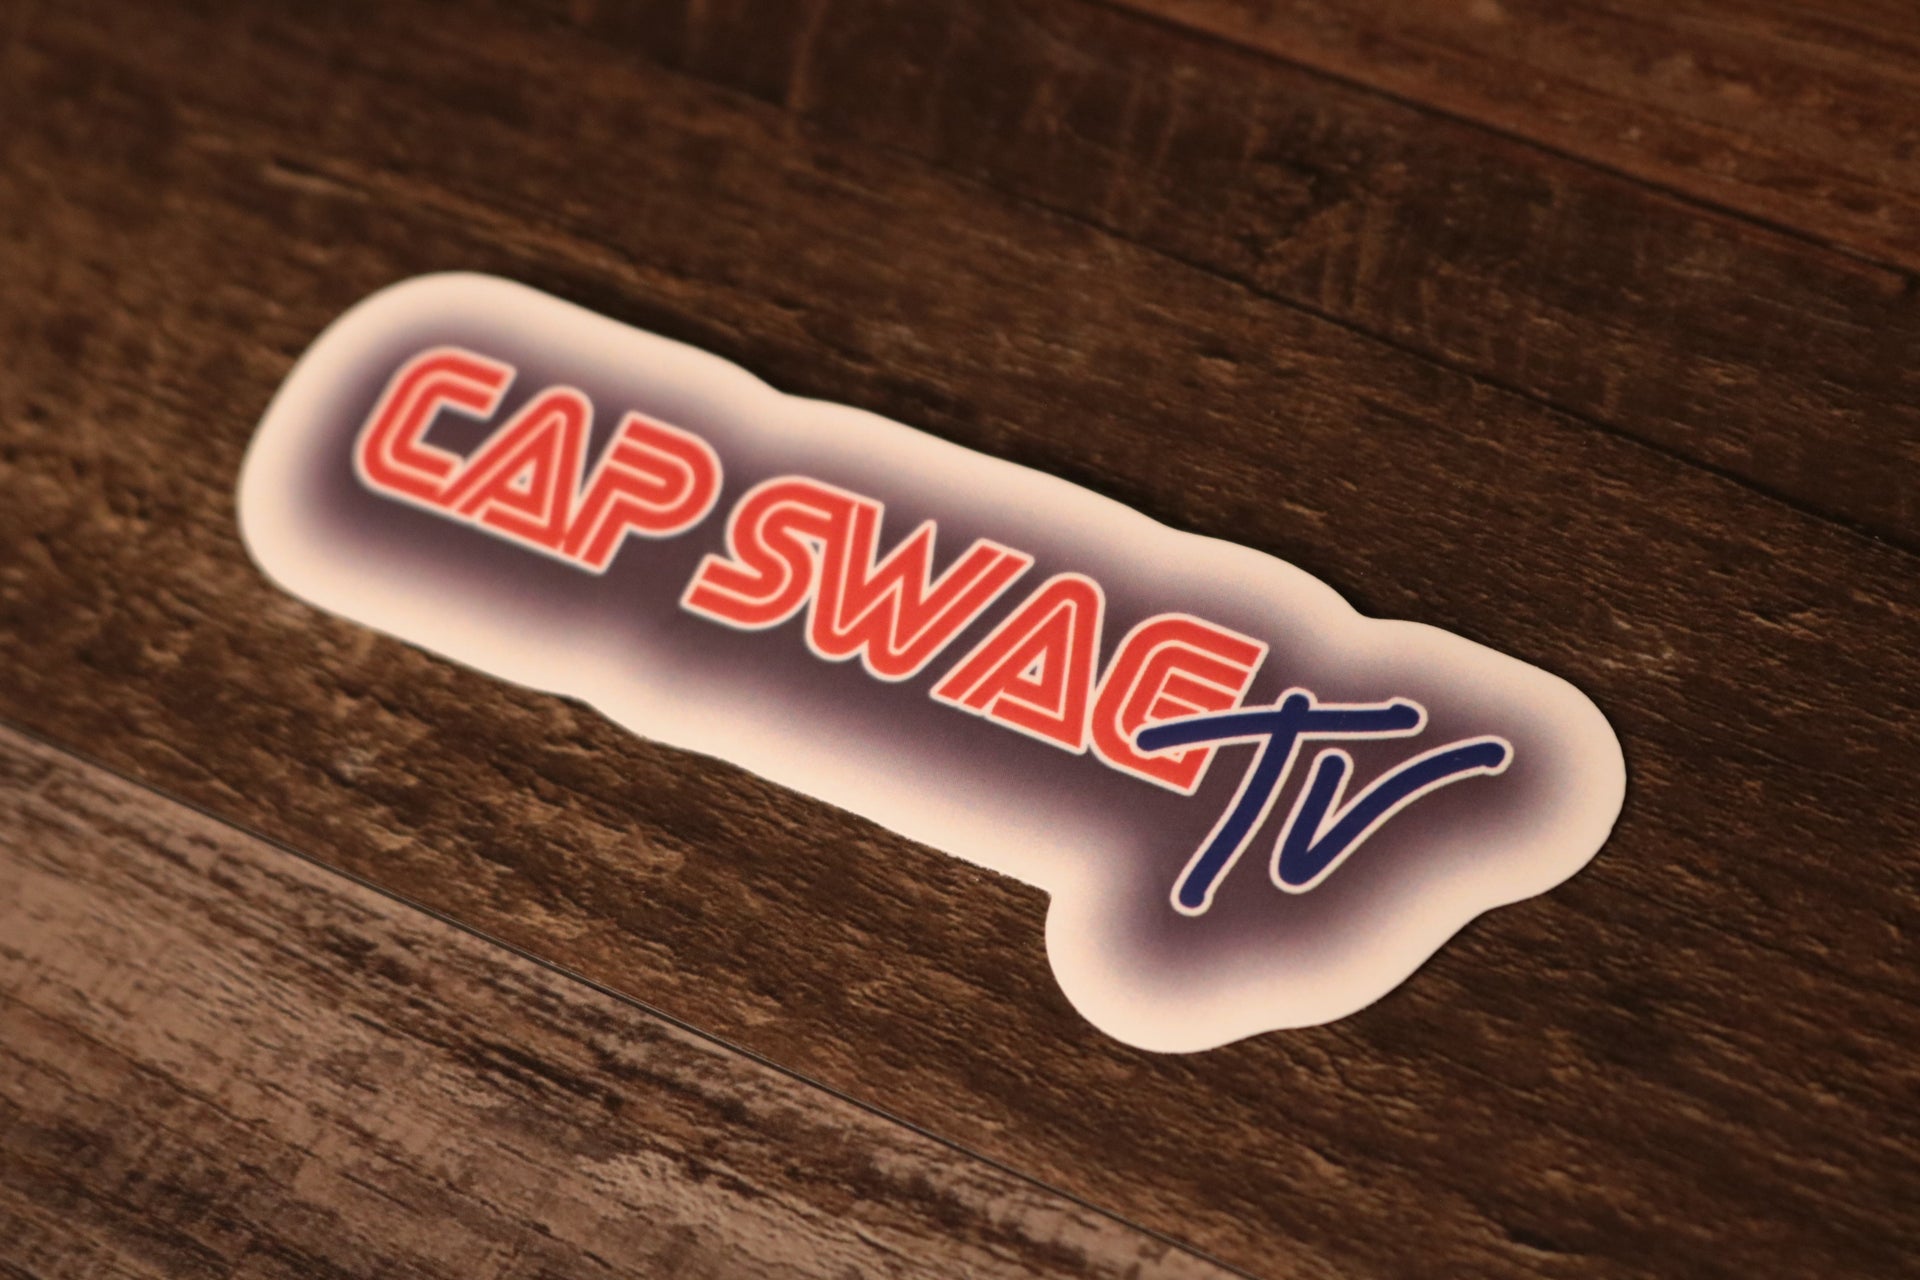 Cap Swag TV Sticker | Cap Swag TV Logo Sticker the front of this sticker has the cap swag tv logo